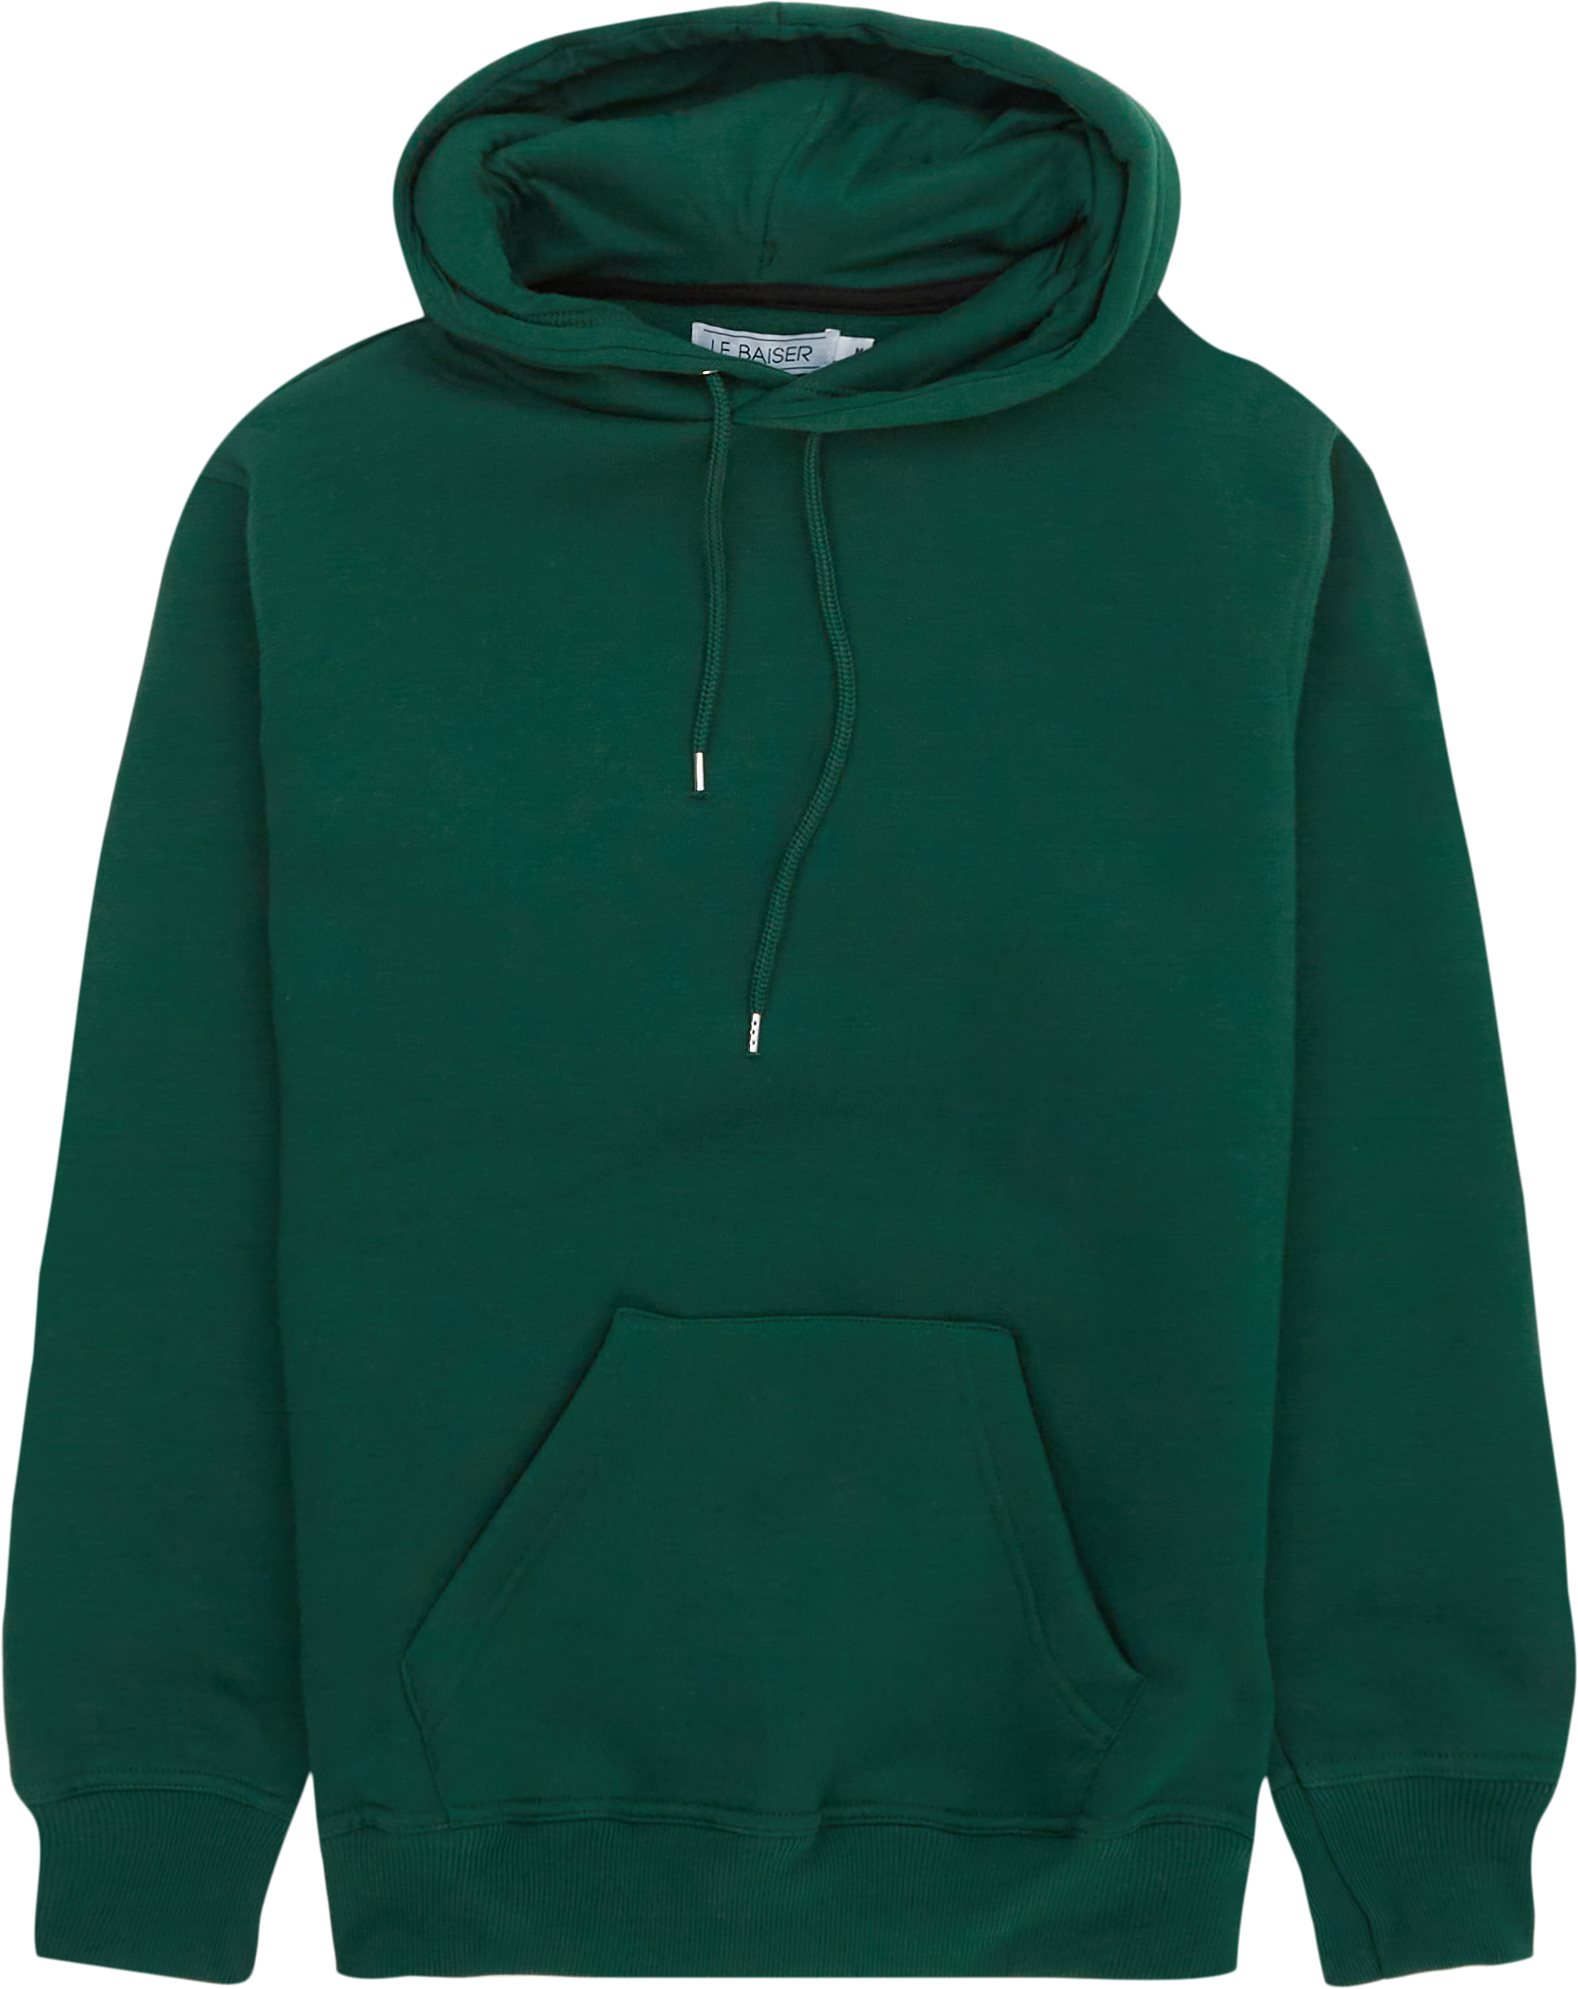 Le Baiser Sweatshirts FARANT Grøn